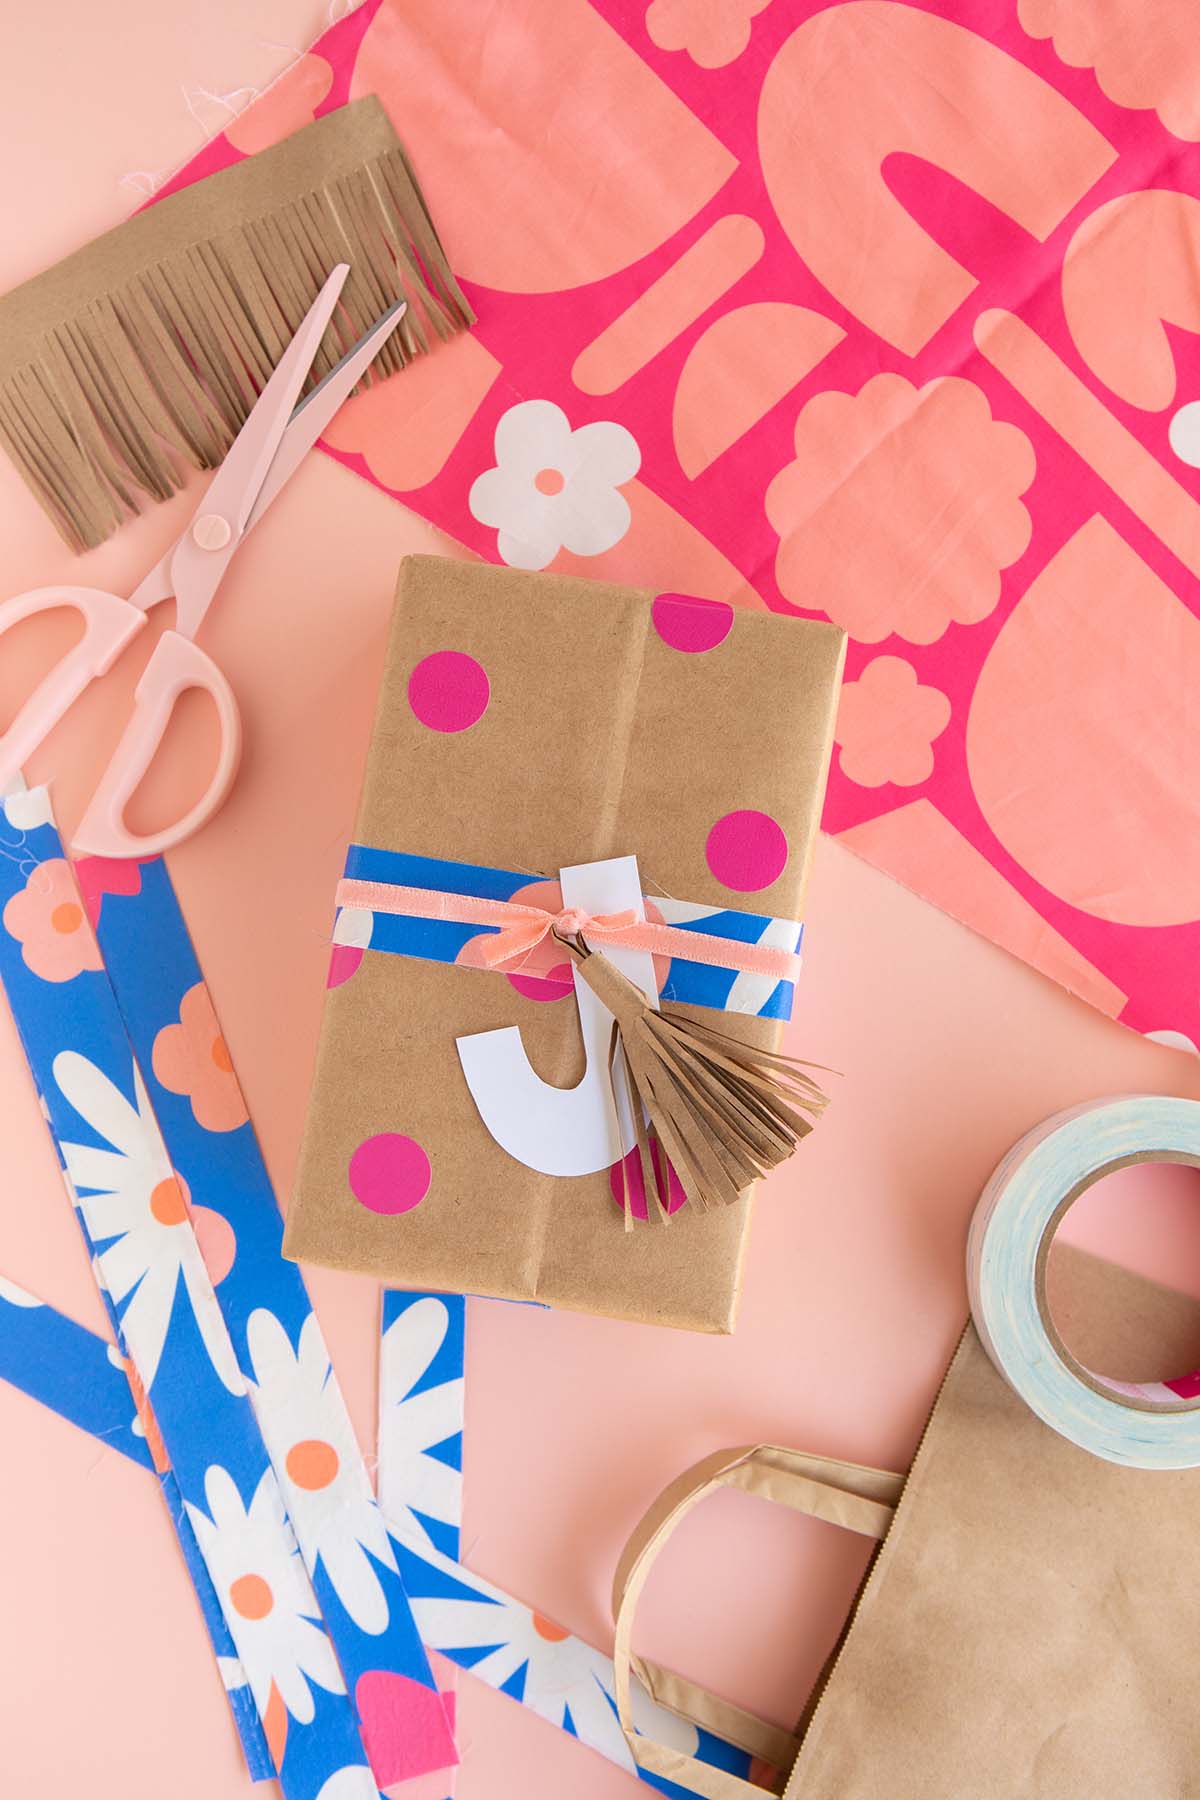 DIY Gift Wrap Ideas - Fabric Scraps into Tape